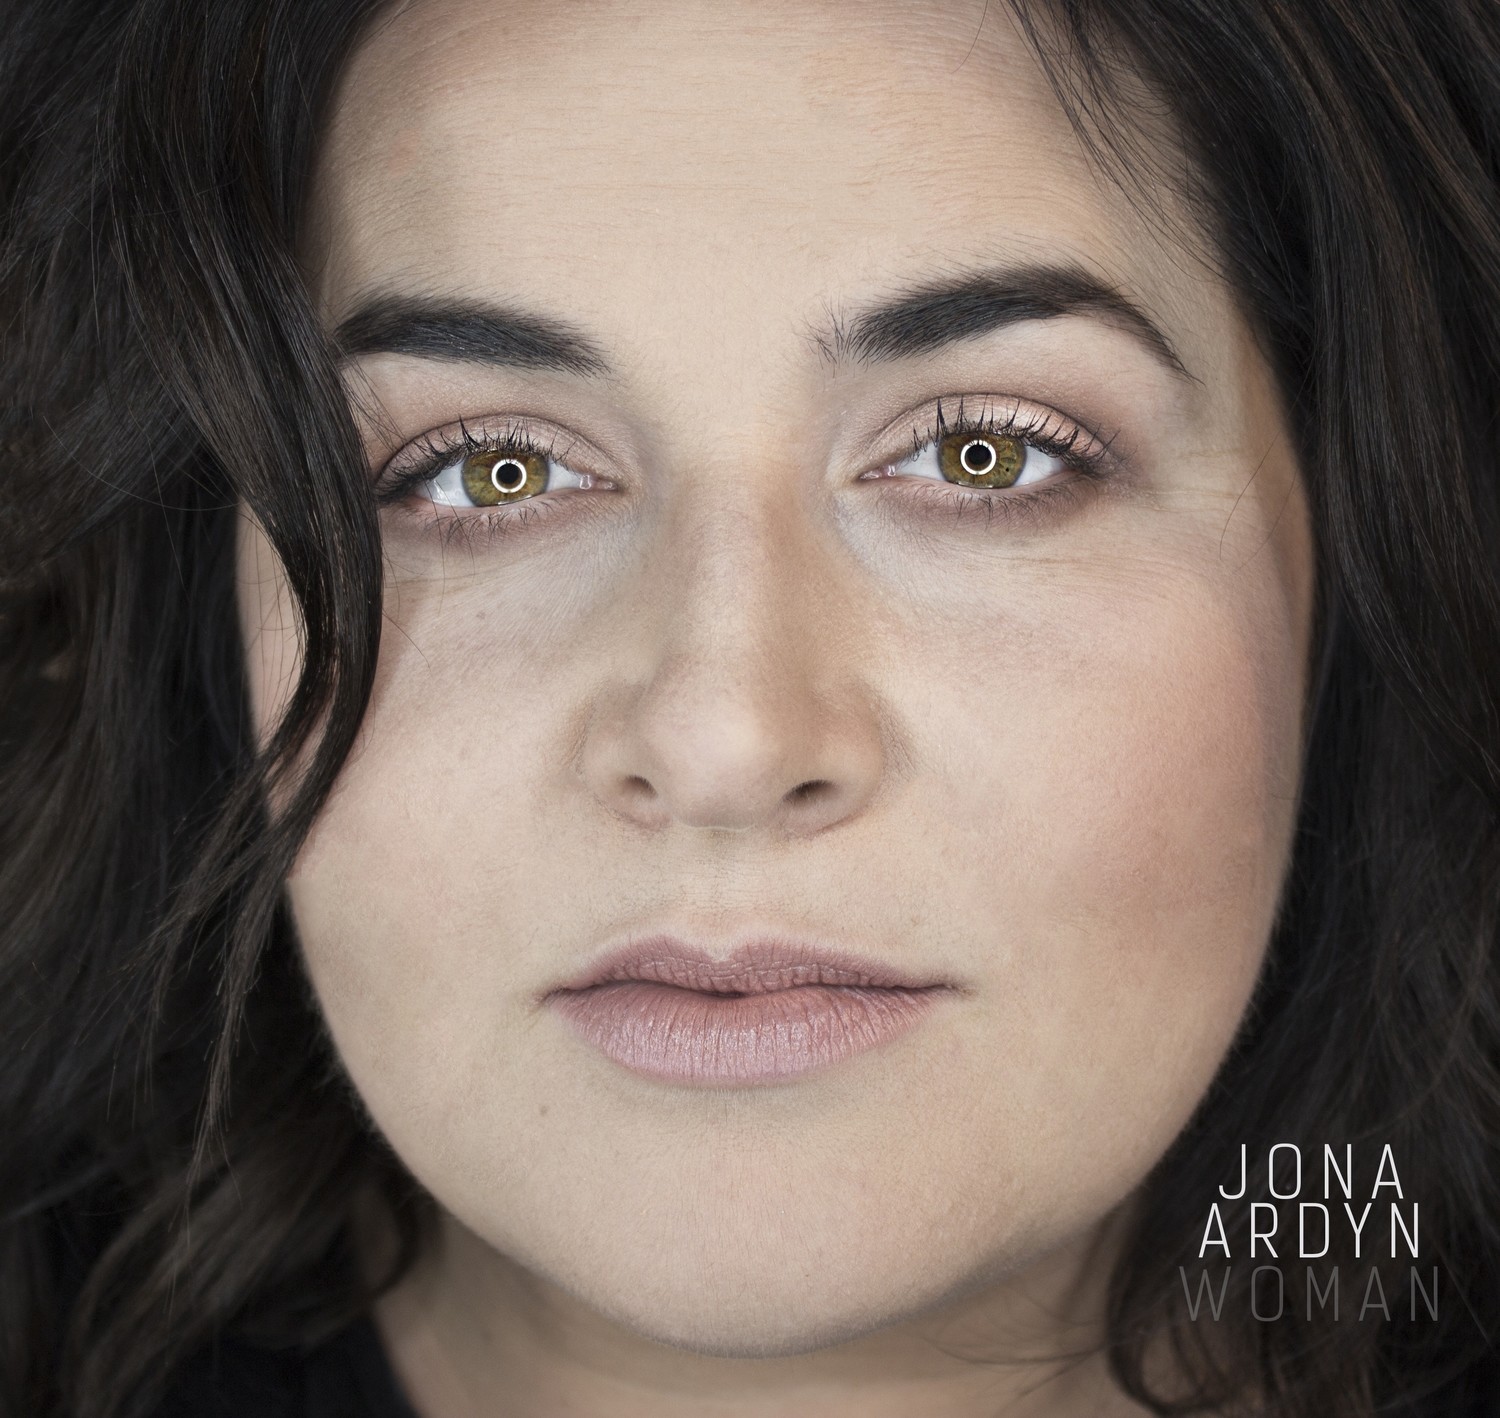 Jona Ardyn "Woman"